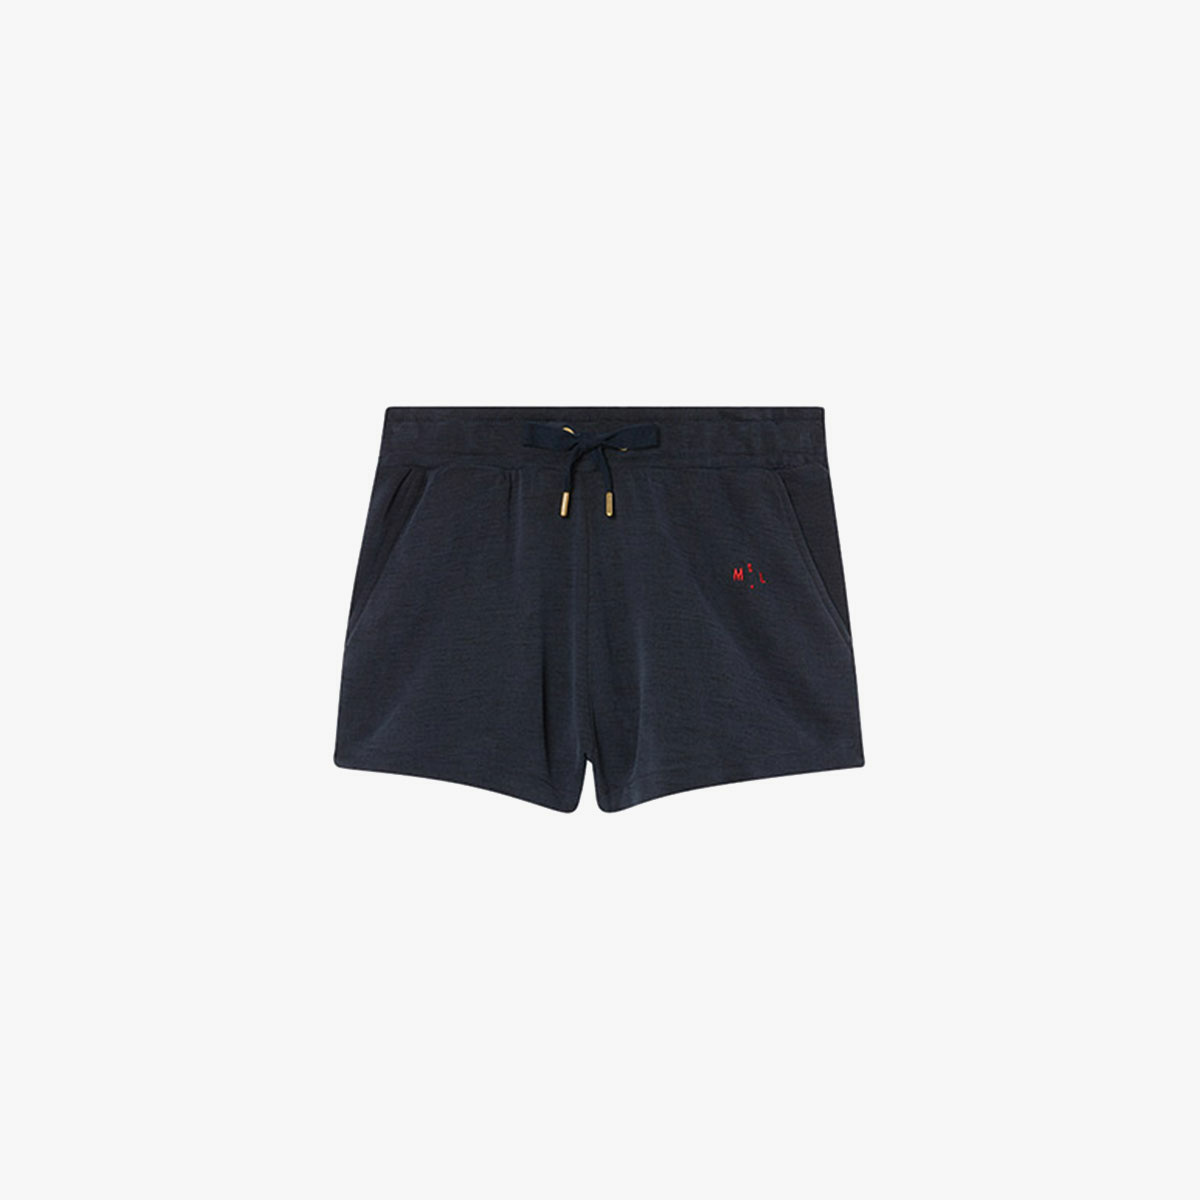 Short Wells, Navy - Short shorts with drawstring - Cupro / Cotton - image 1